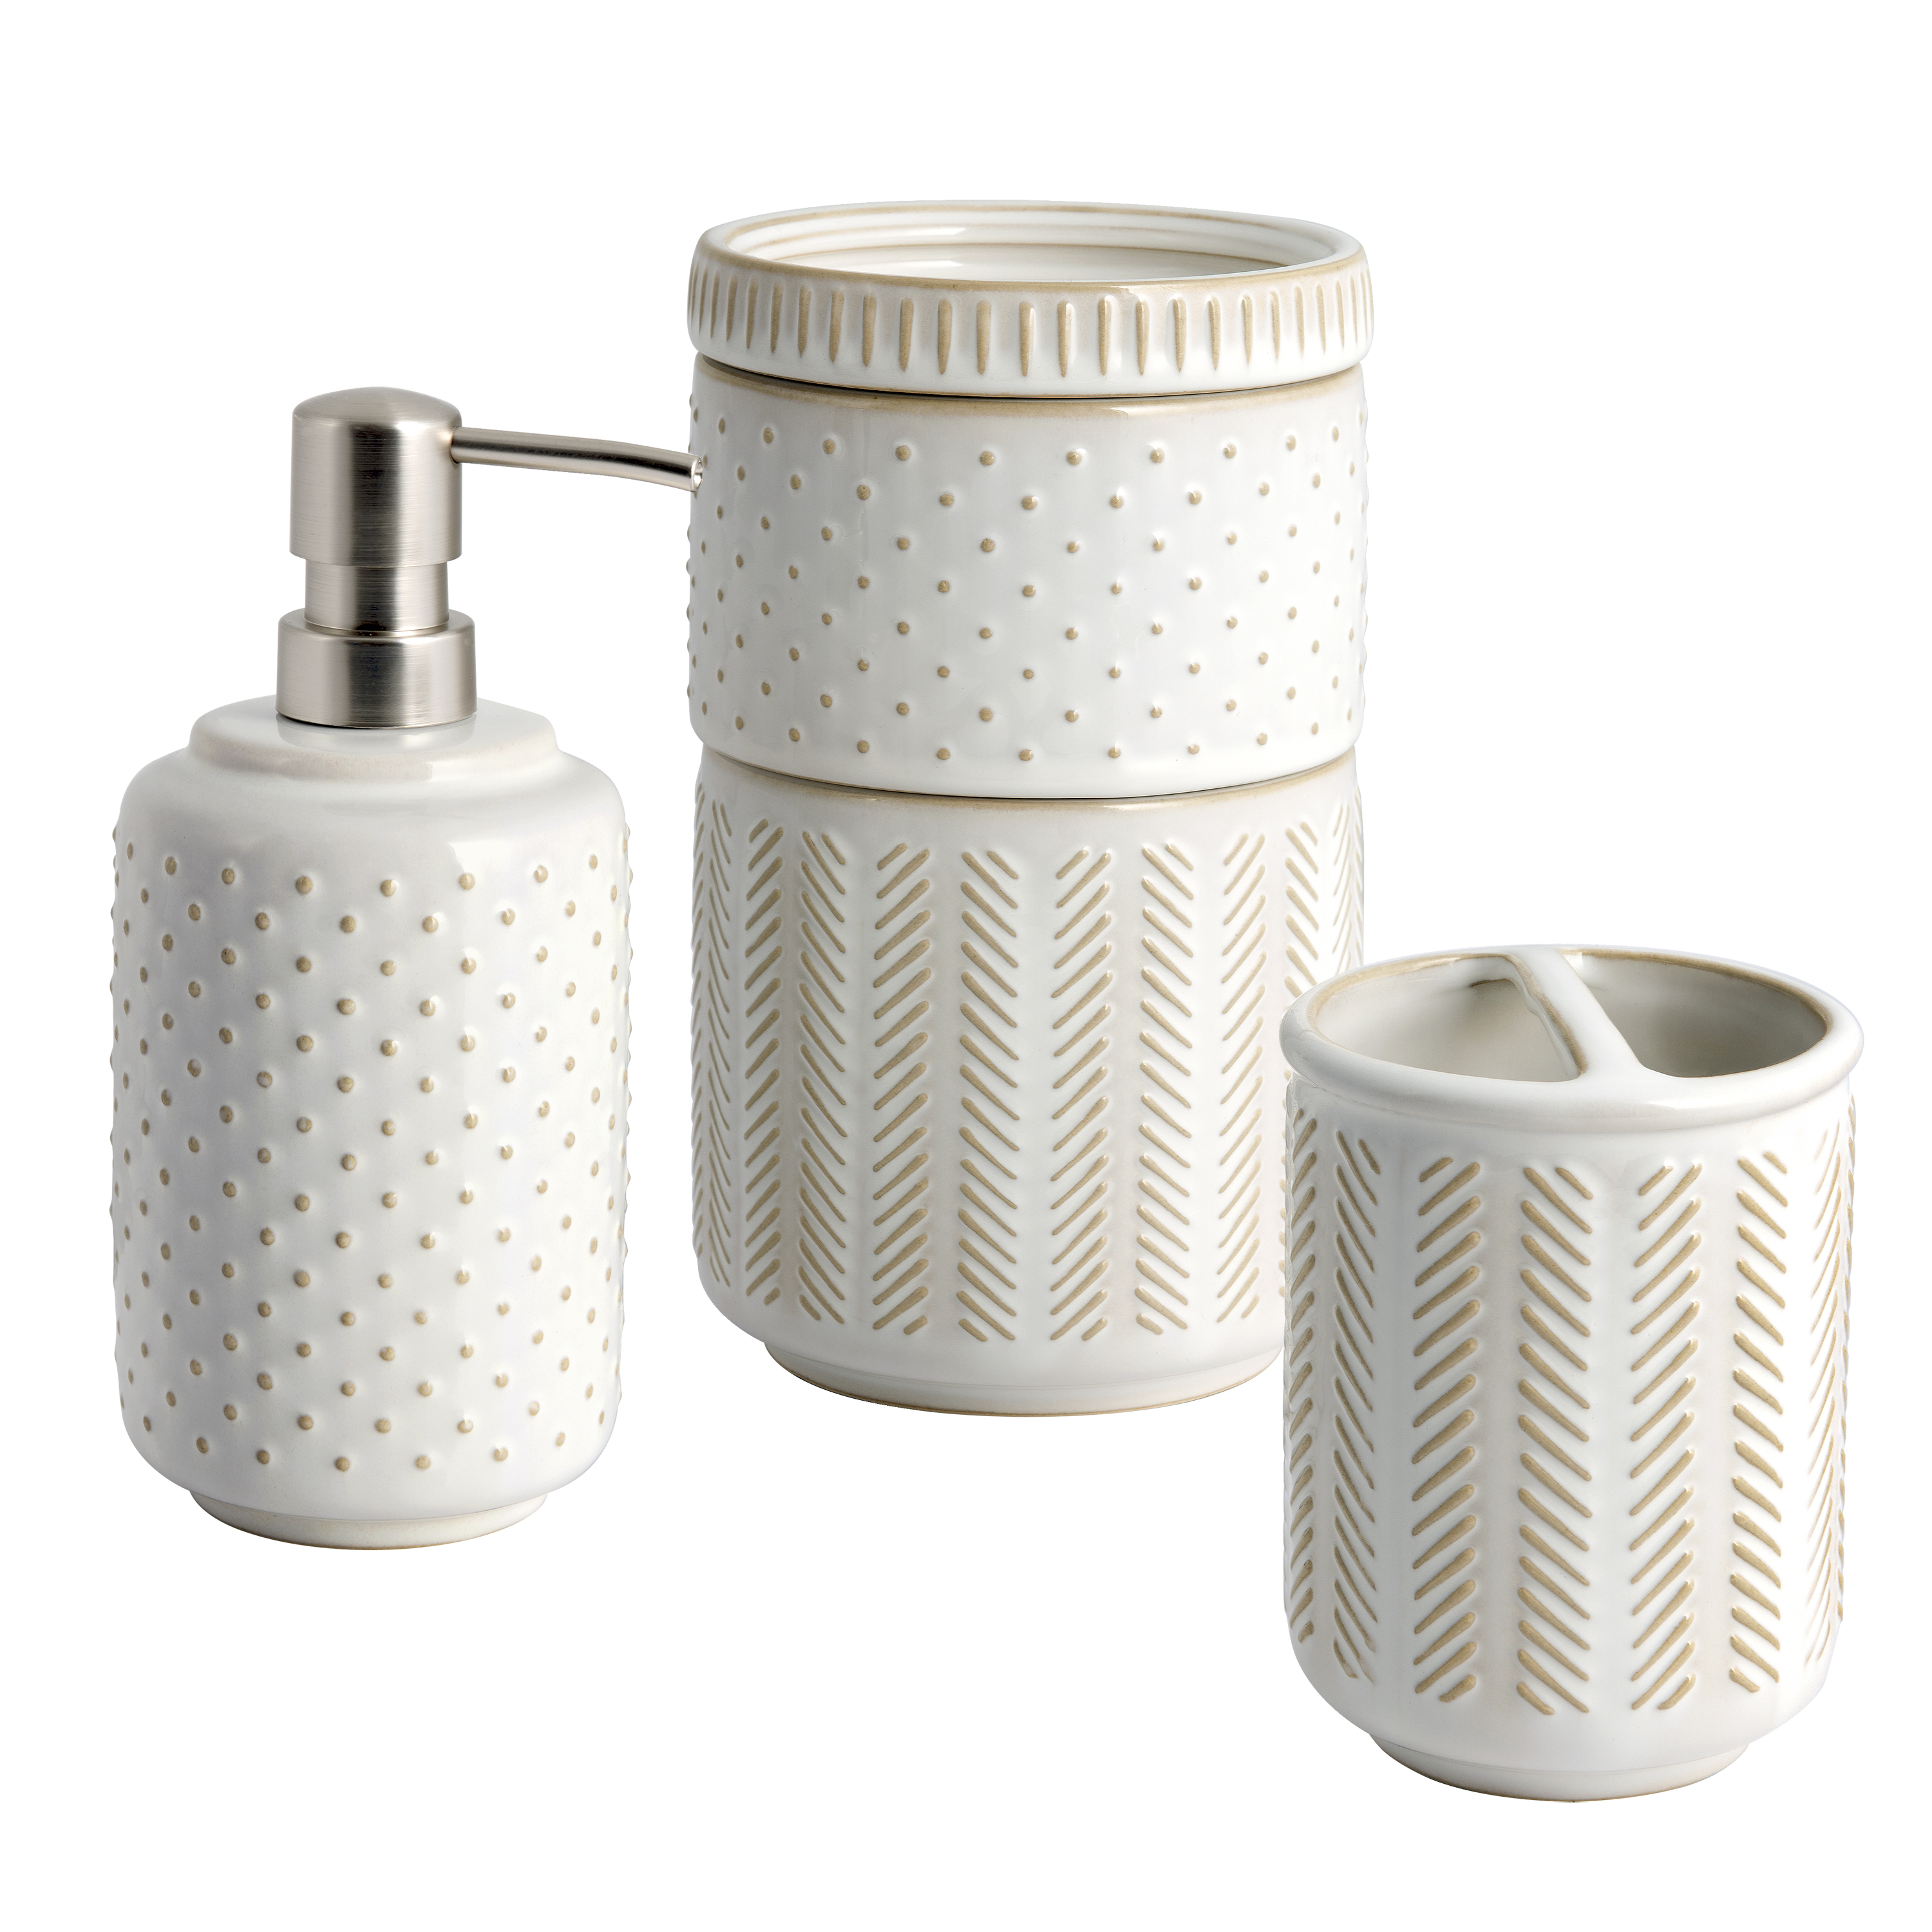 Better Homes & Gardens Reactive Glazed Textured Ceramic Toothbrush Holder in Creamy White - image 5 of 6